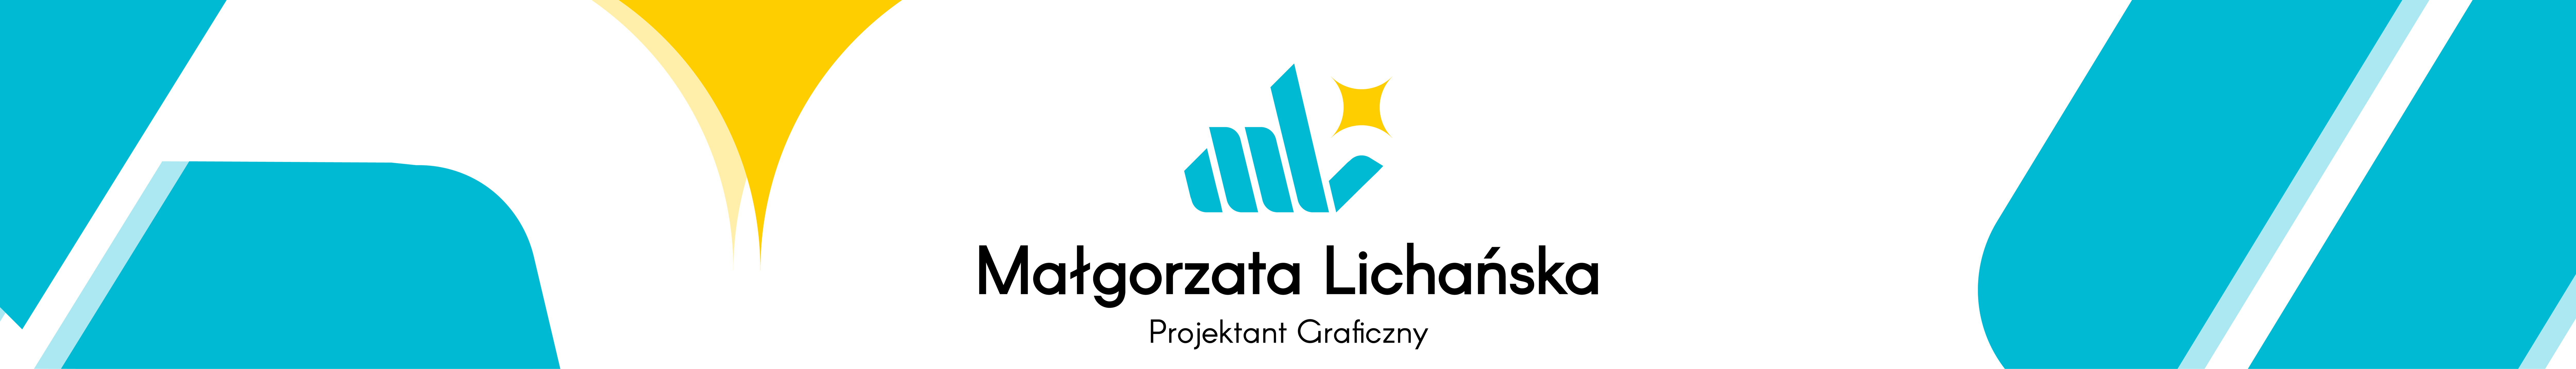 Małgorzata Lichańska's profile banner